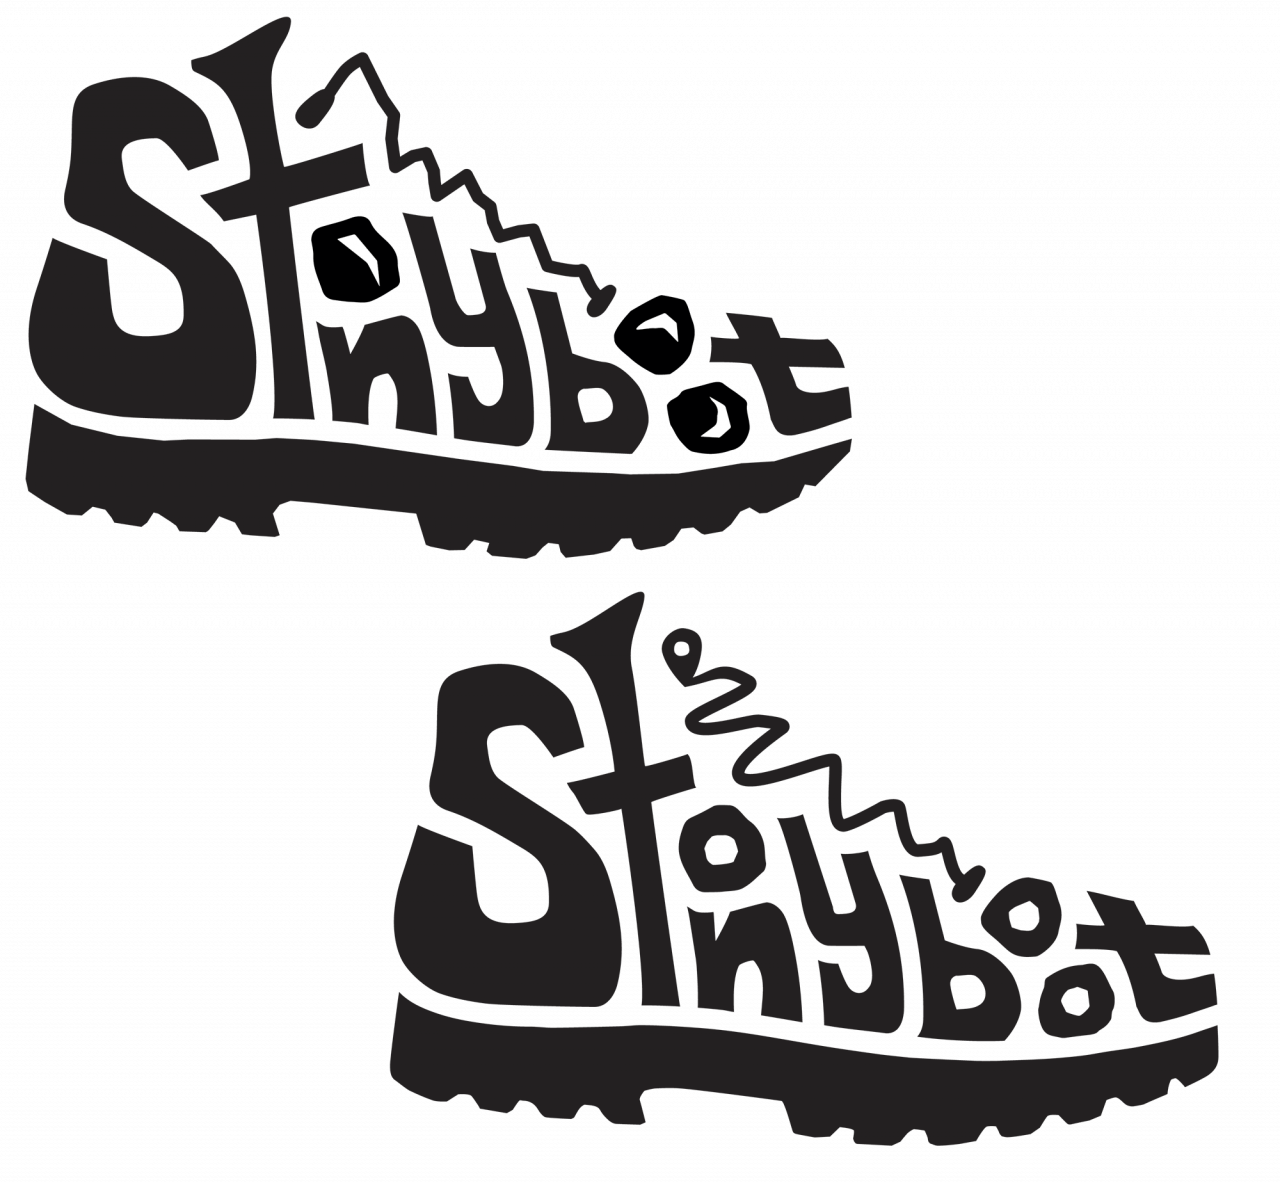 Stonyboots logo final revisions